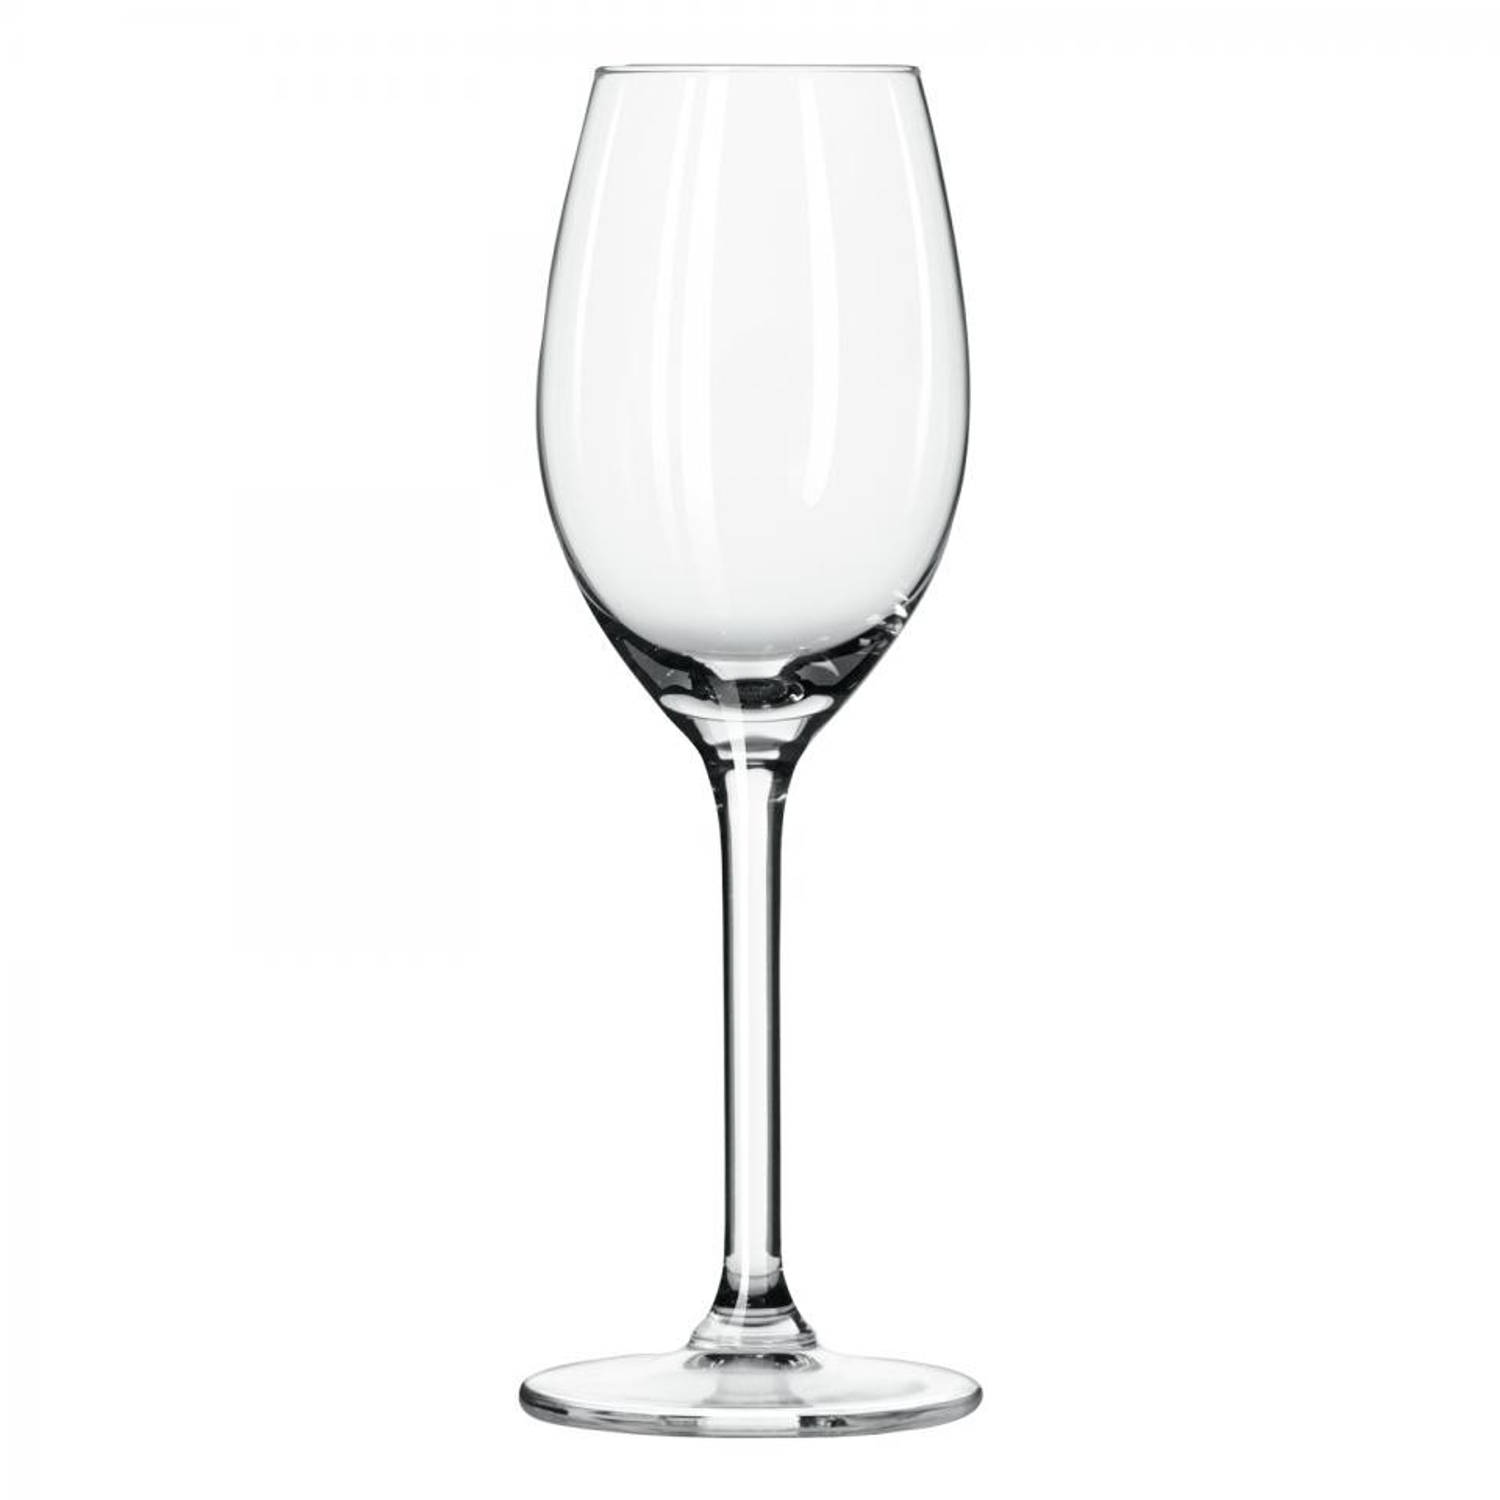 Royal Leerdam L'Esprit du Vin Port sherryglas - 14 cl - 6 stuks